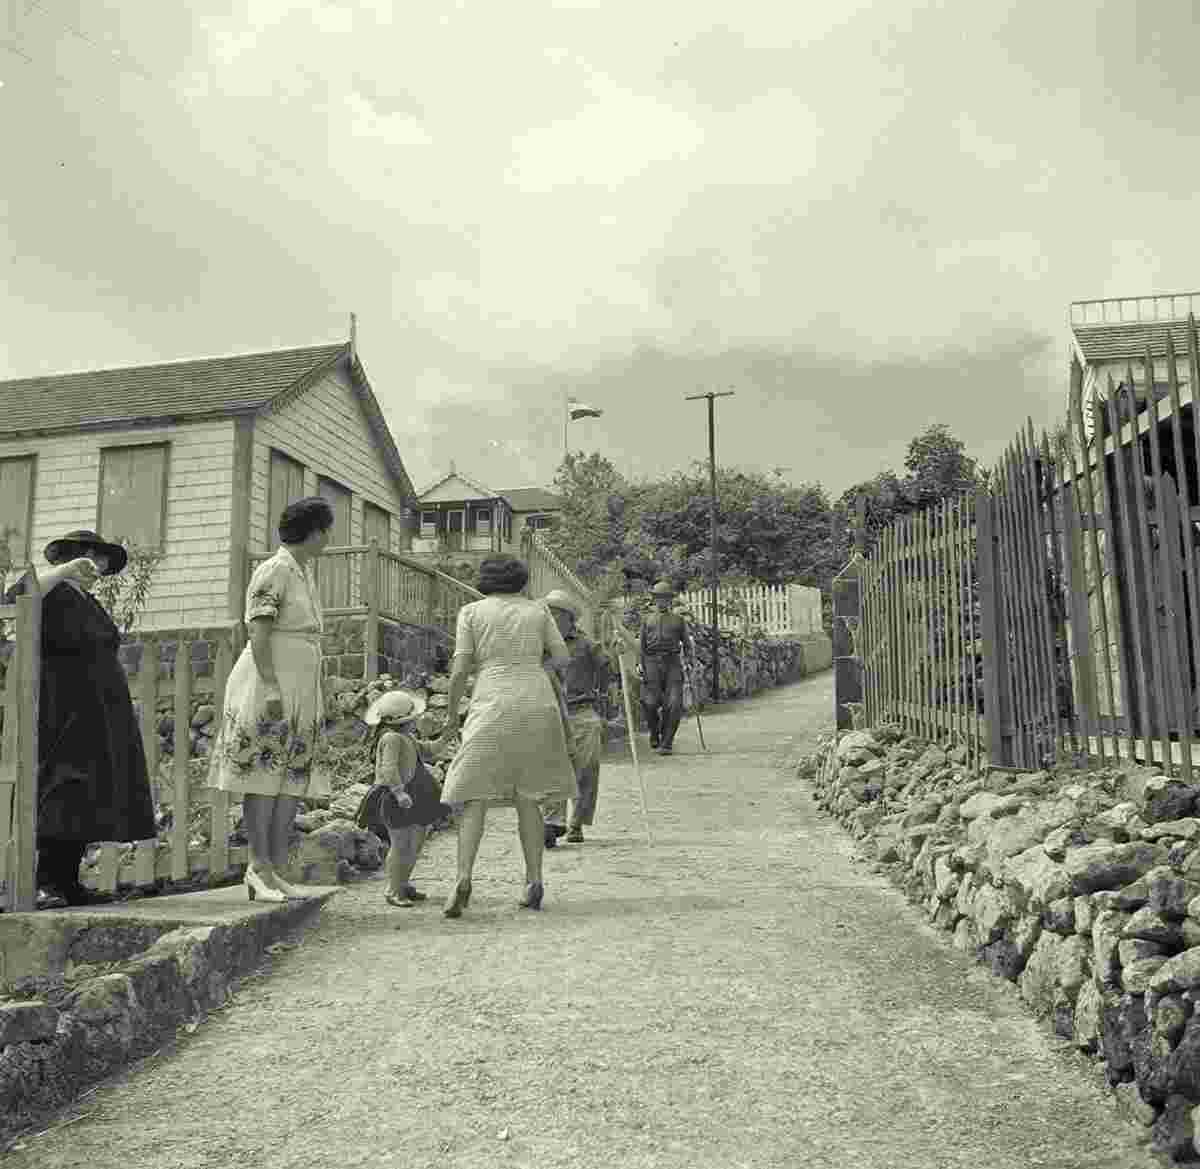 Windwardside. Residents on the street, 1947